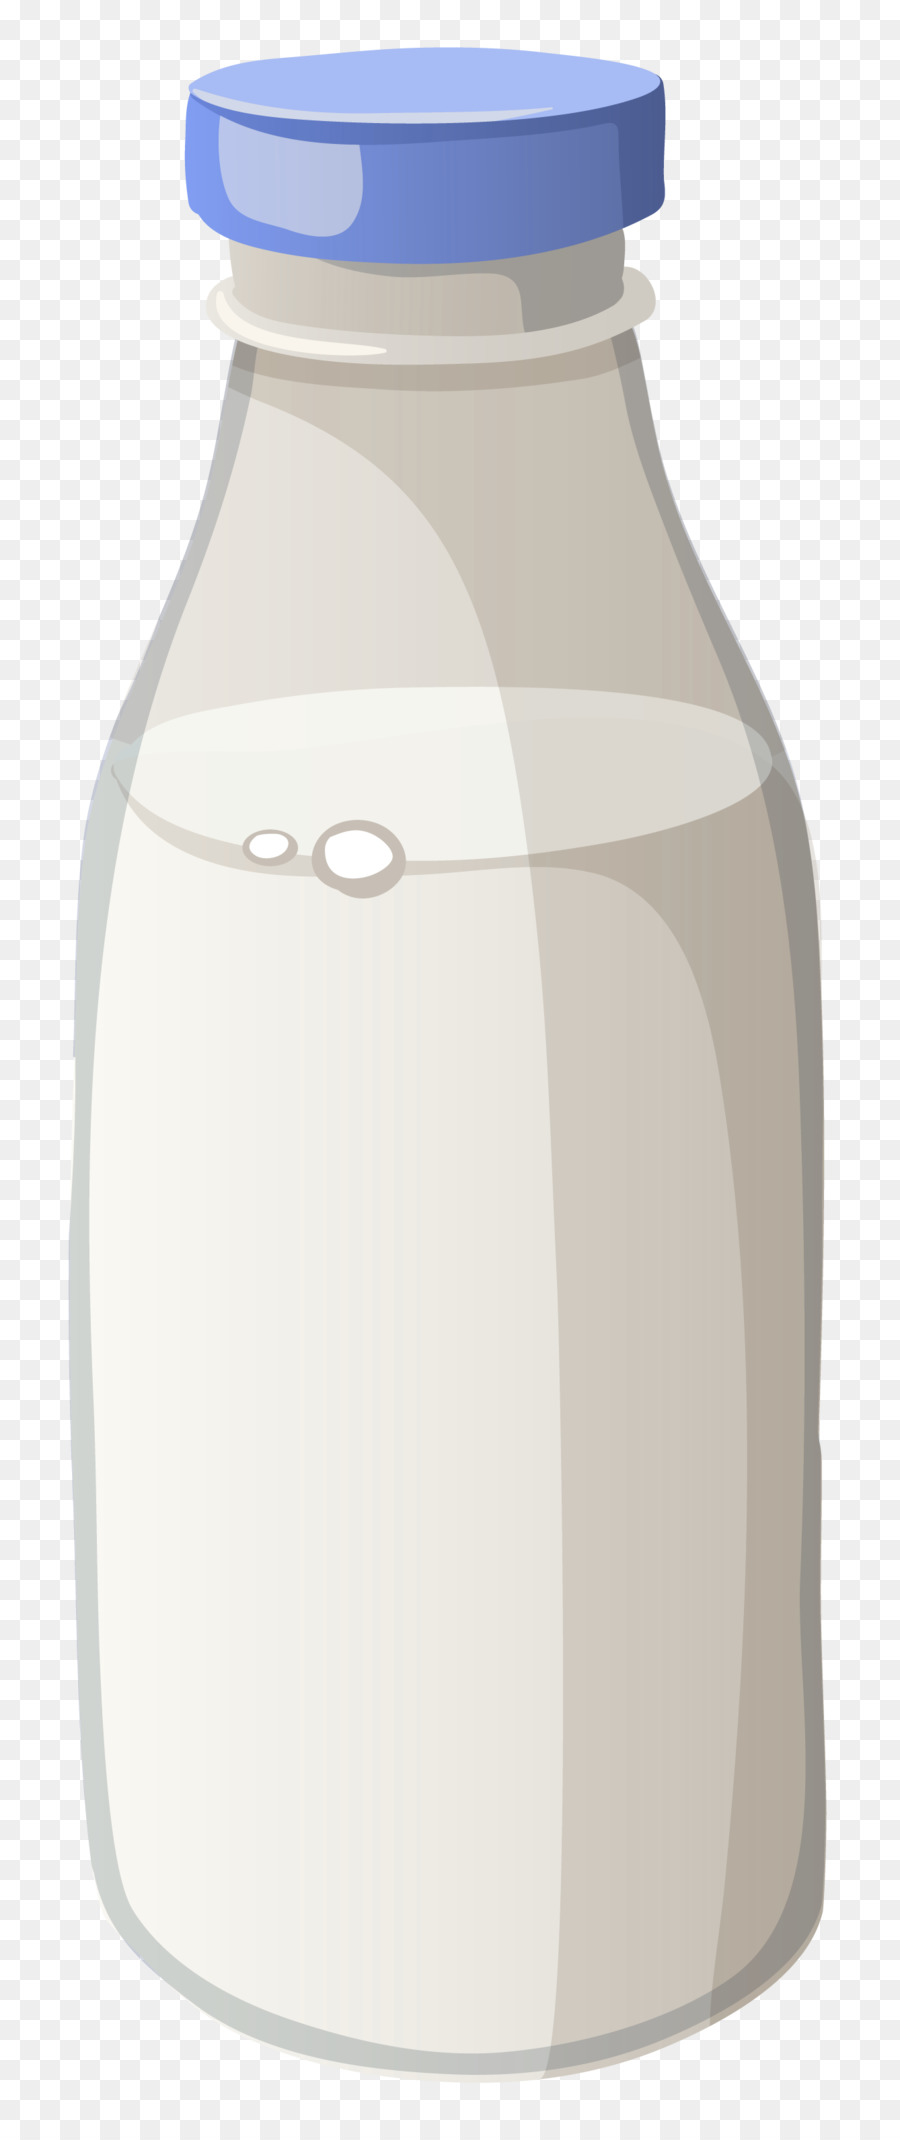 clipart milk milk bottle